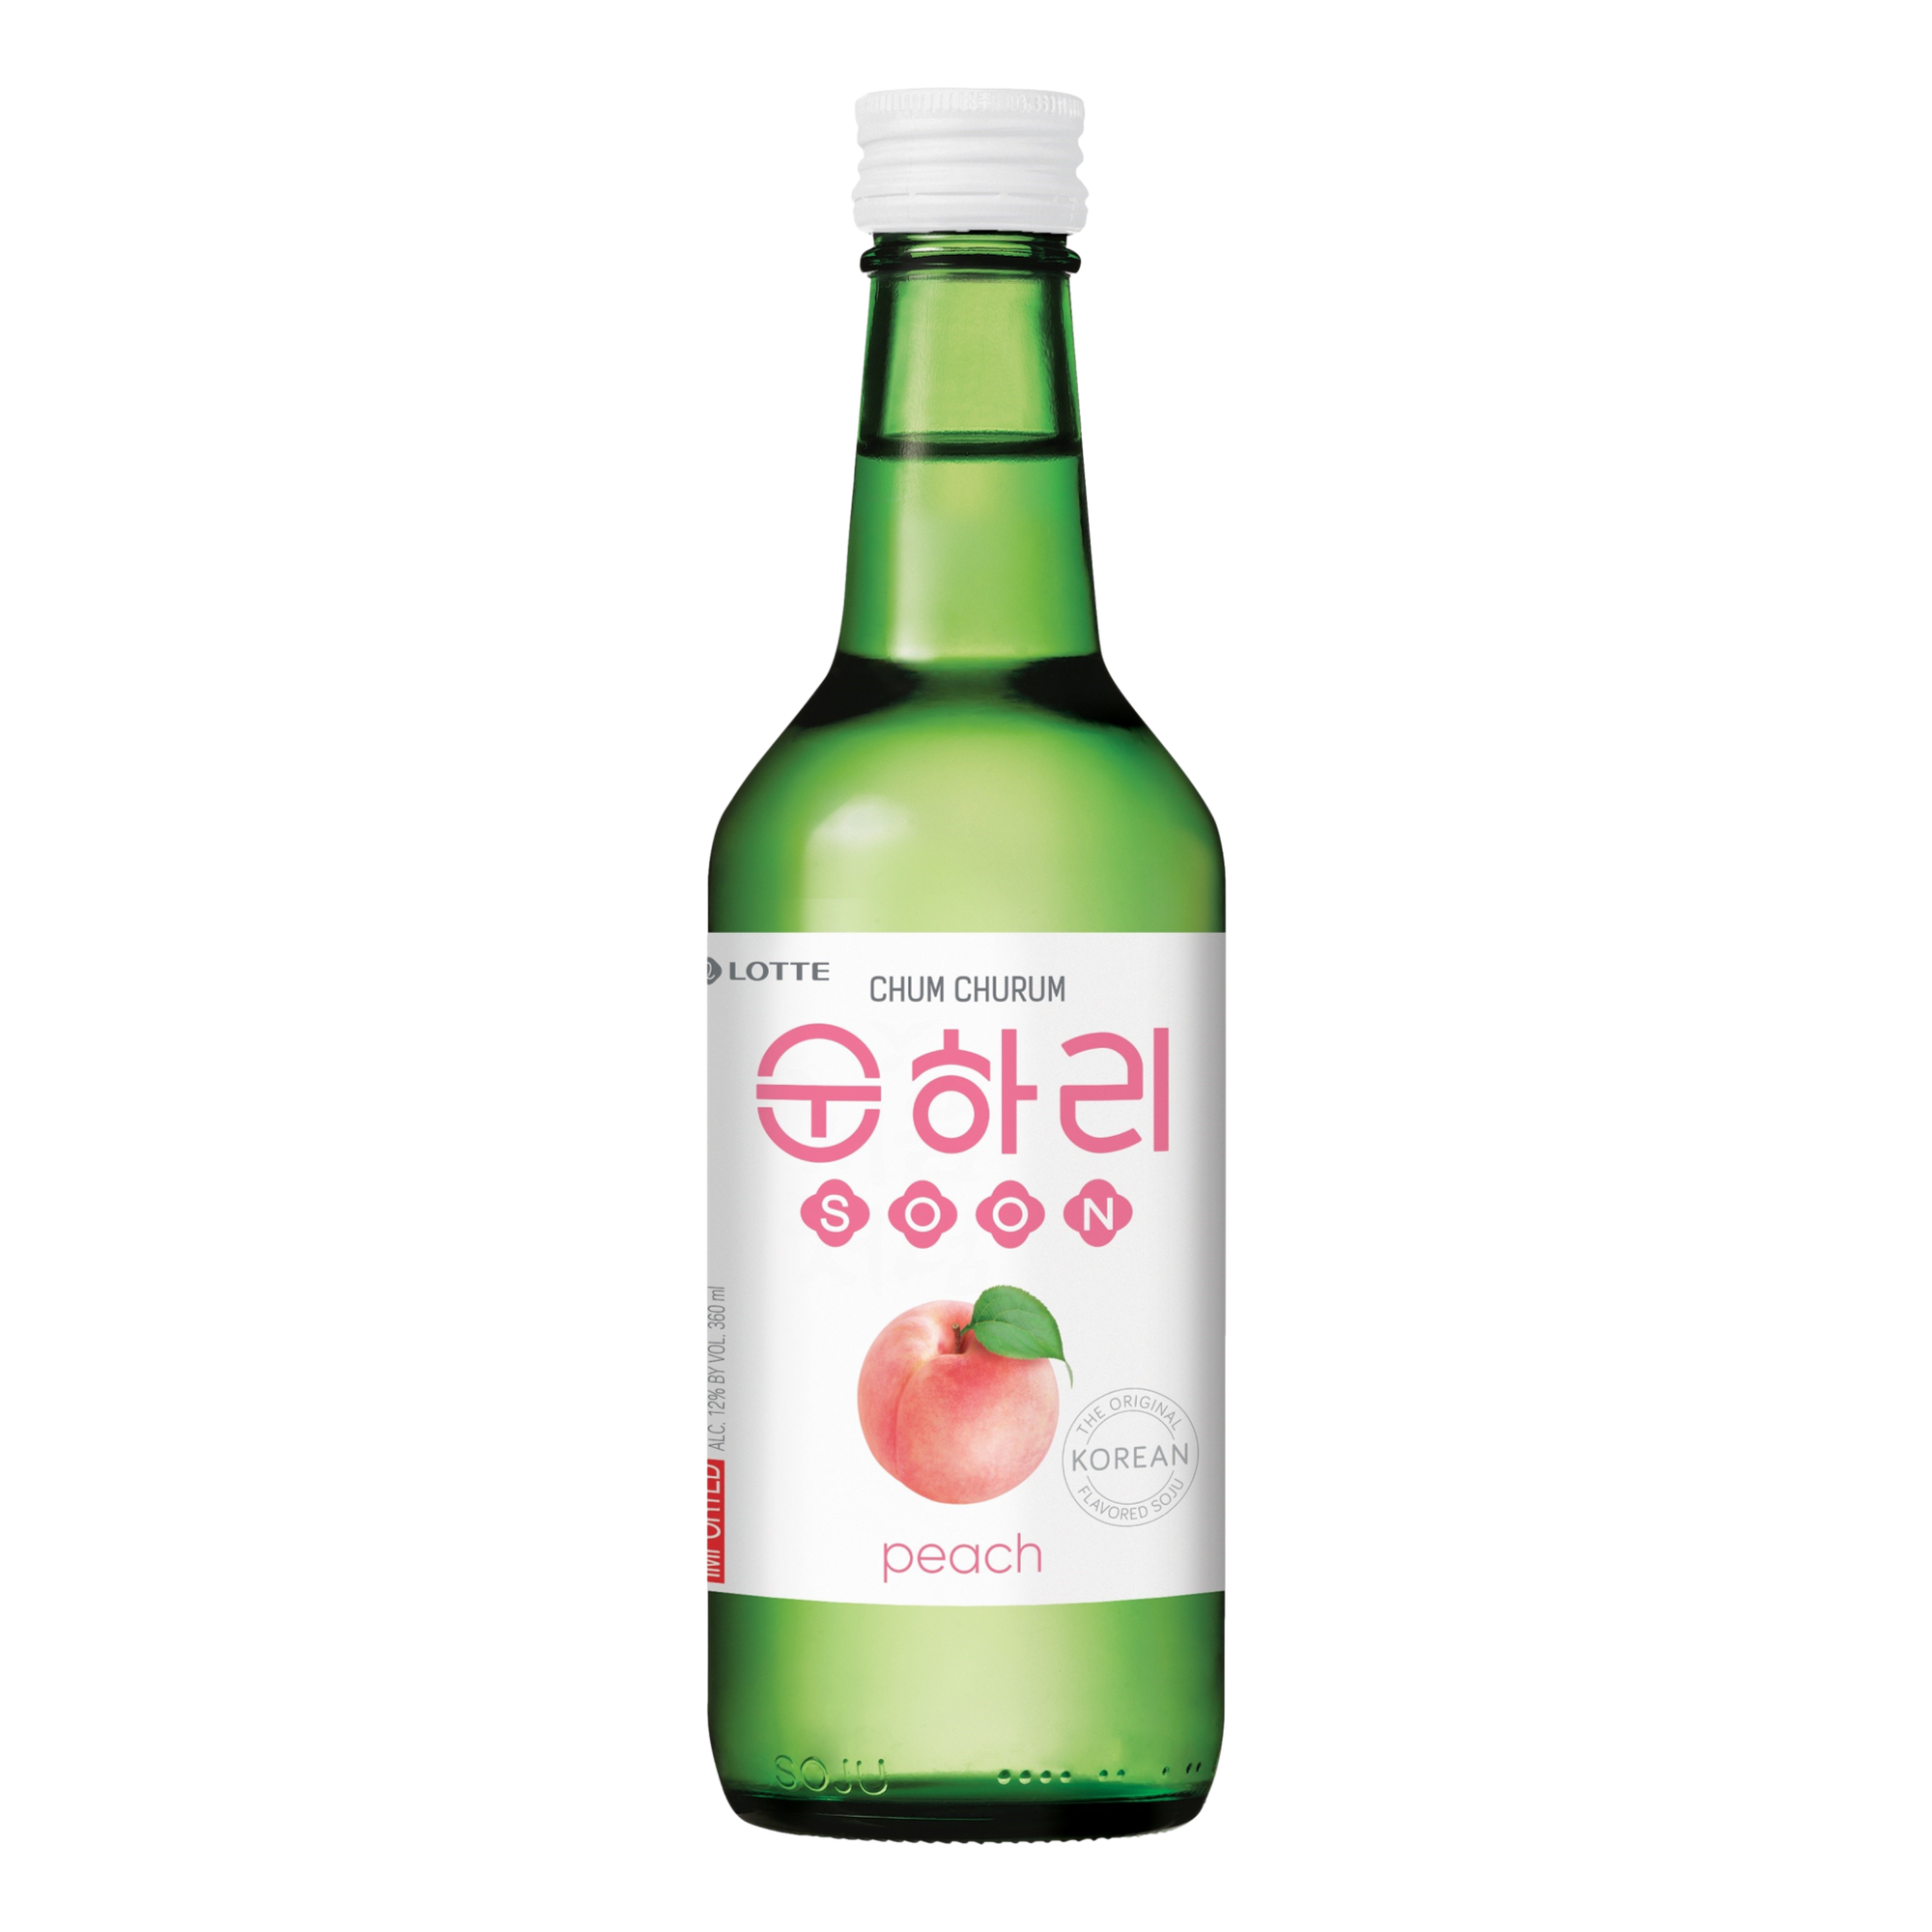 Lotte Chum Churum Peach Soju 360ml Bottle Single